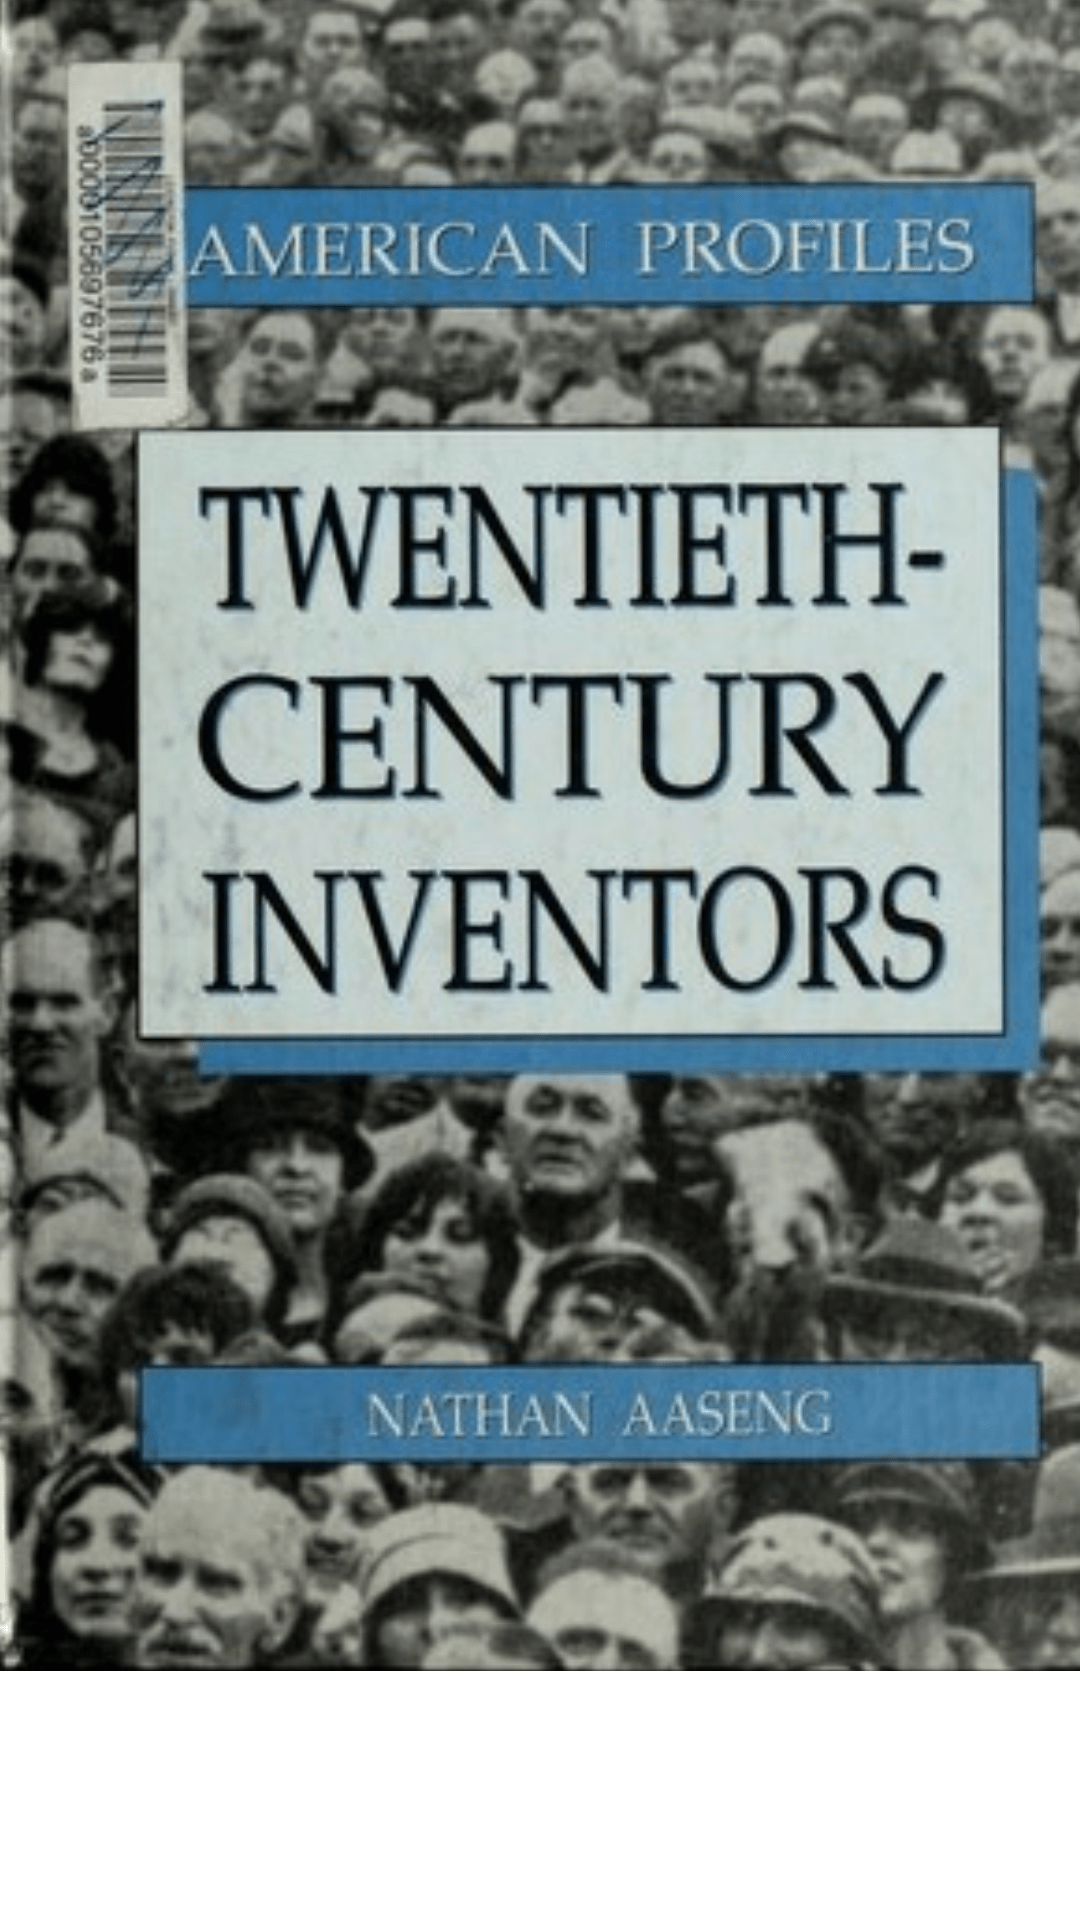 Twentieth-century Inventors